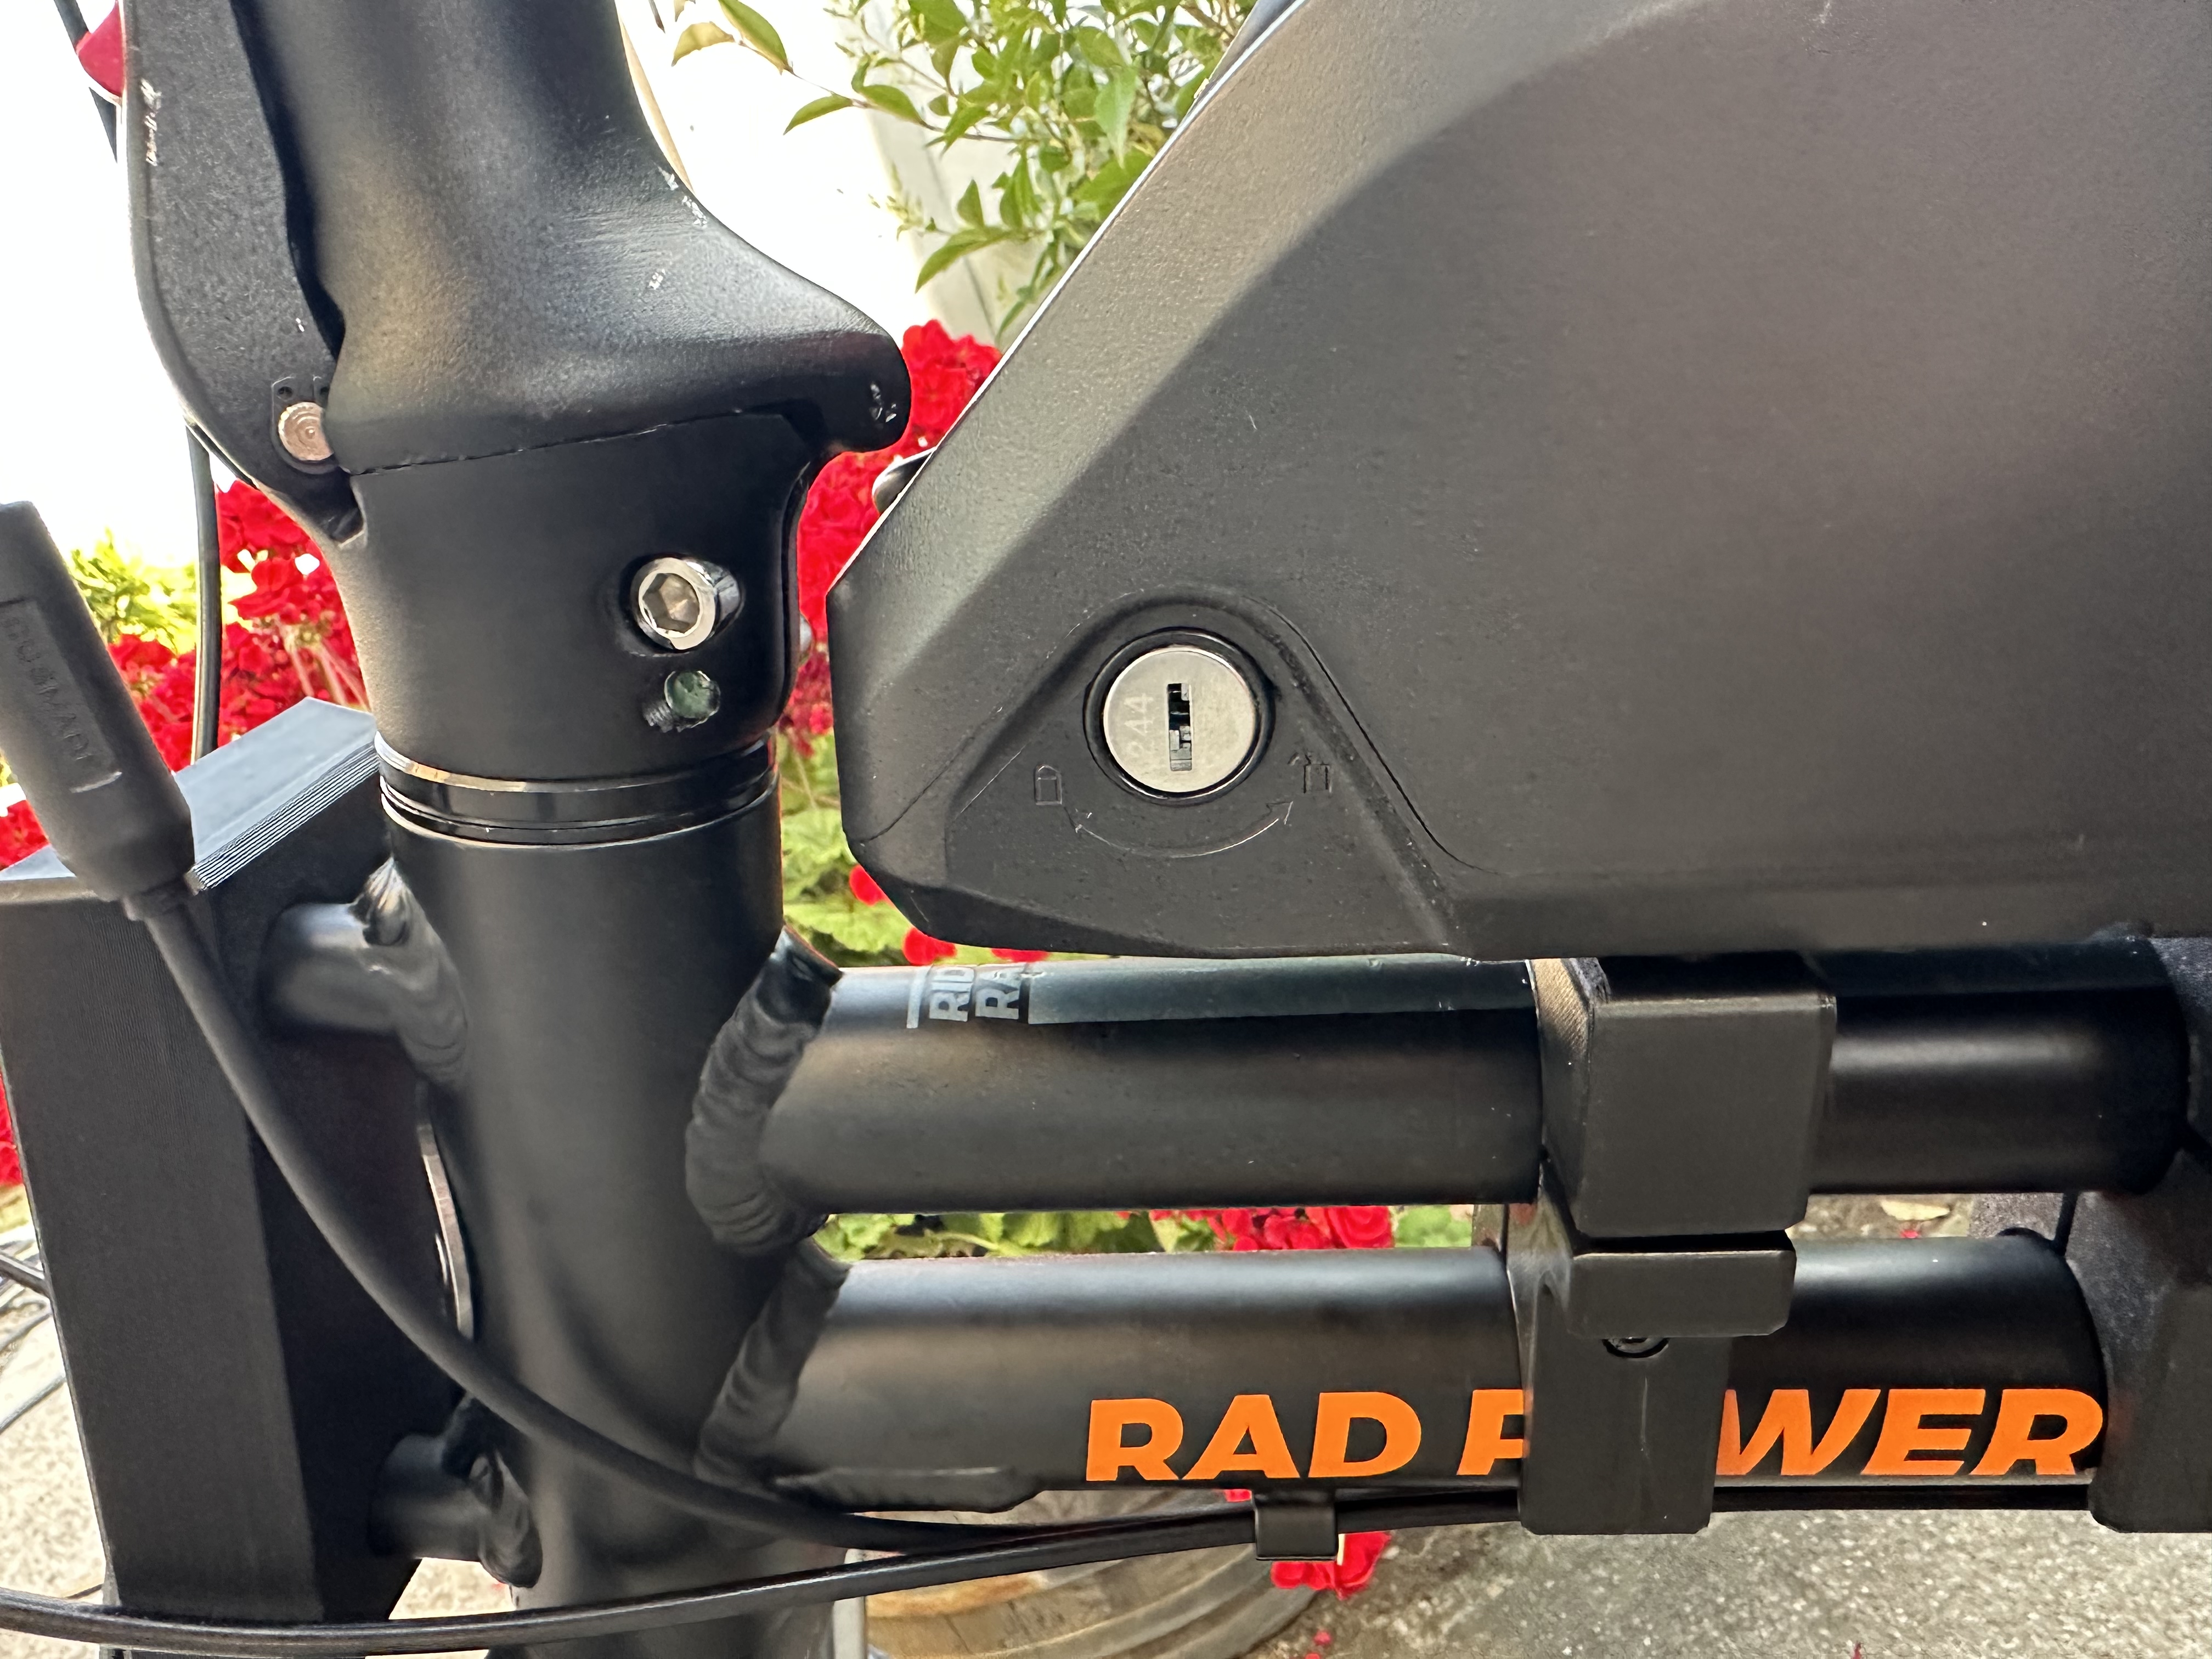 Battery on bike close up next to stem